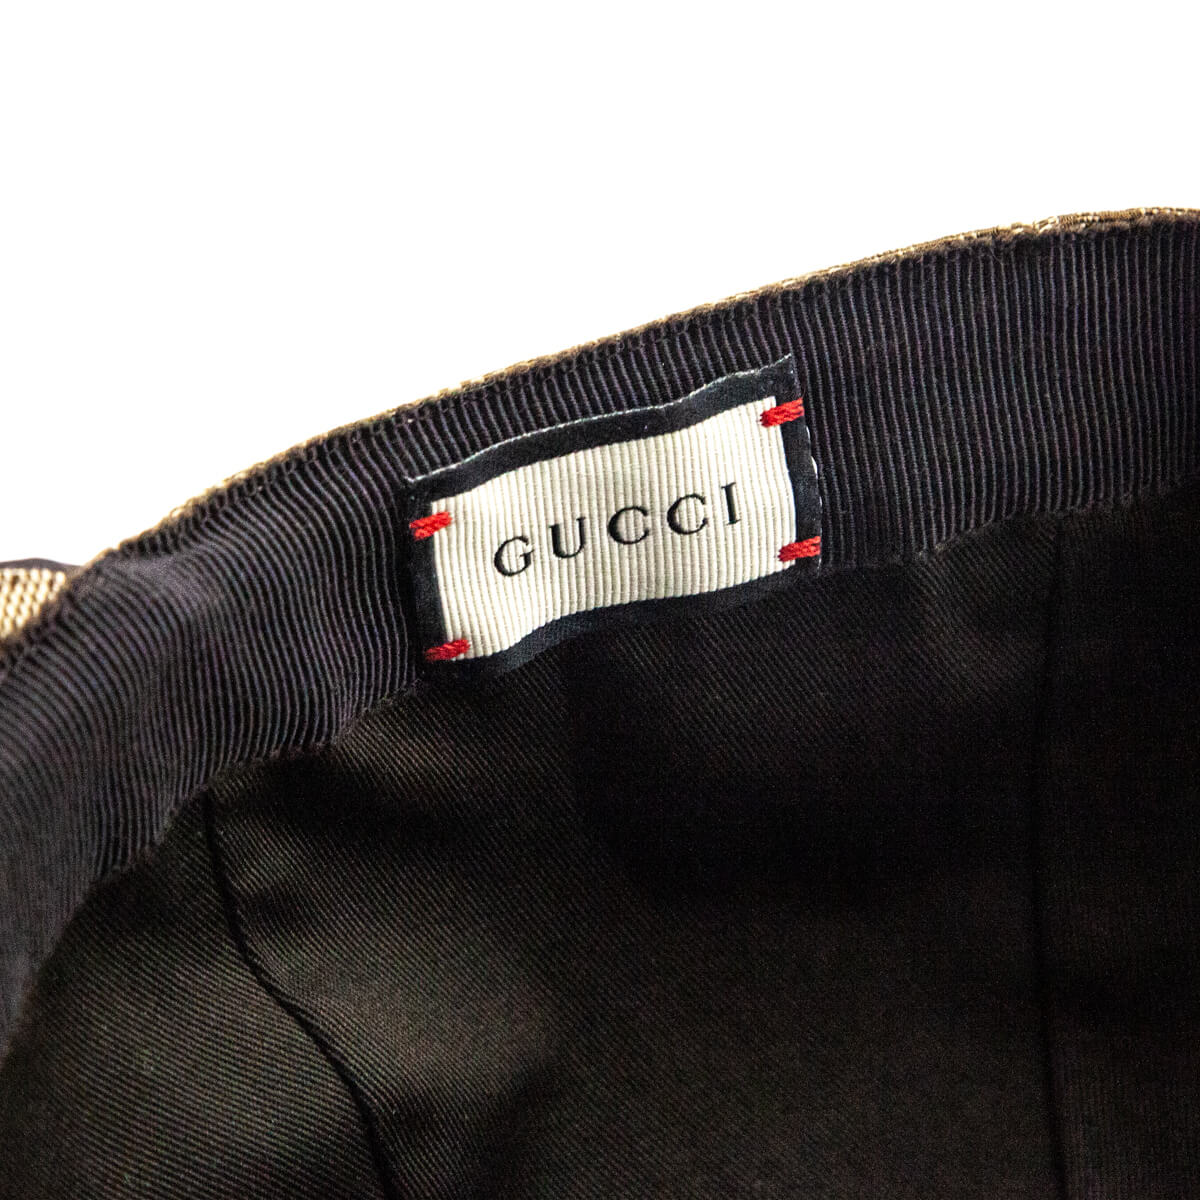 Gucci Beige GG Supreme Canvas Web Cap Size XL - Love that Bag etc - Preowned Authentic Designer Handbags & Preloved Fashions